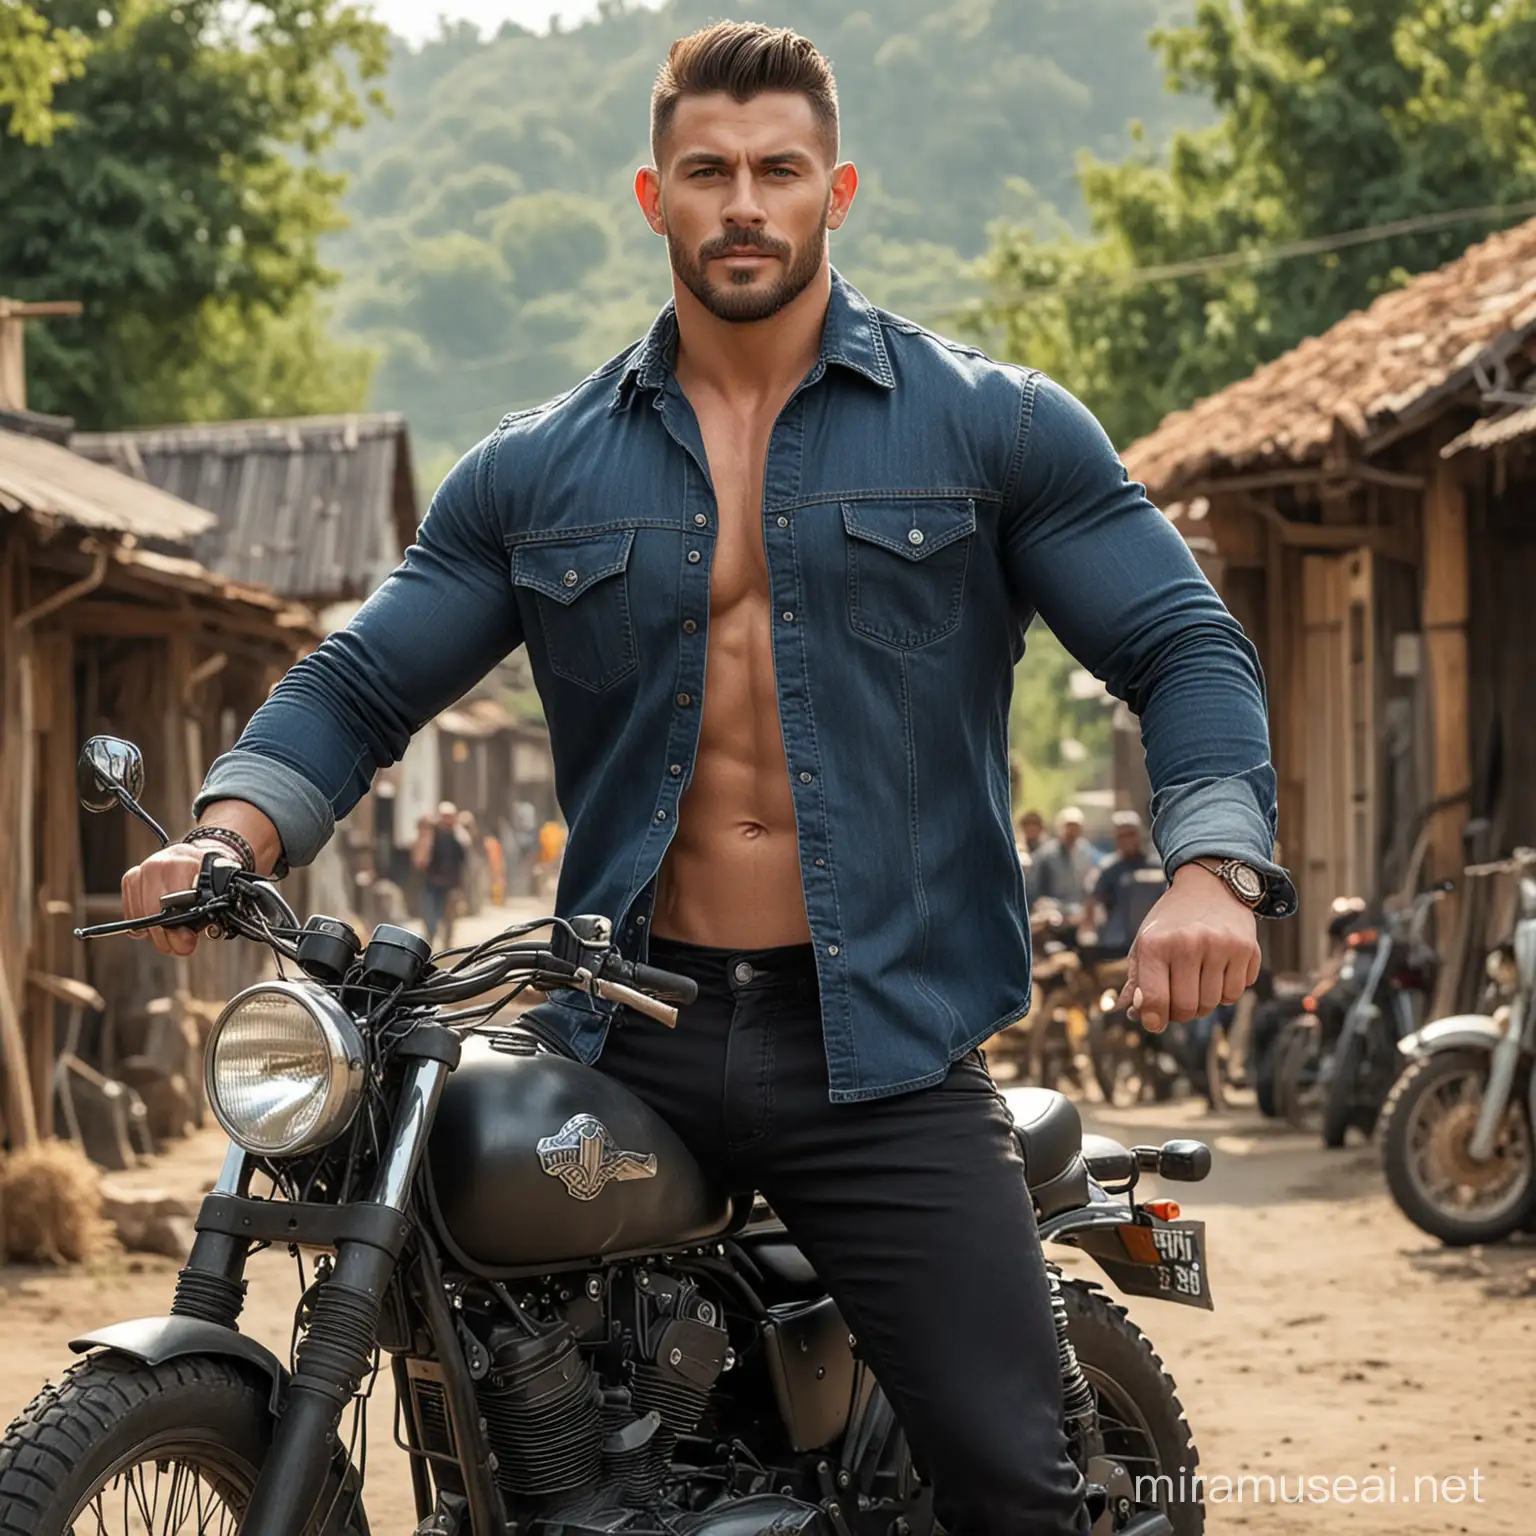 Big giant muscular build men wearing unbuttoned black denim shirt at village on heavy motor bike